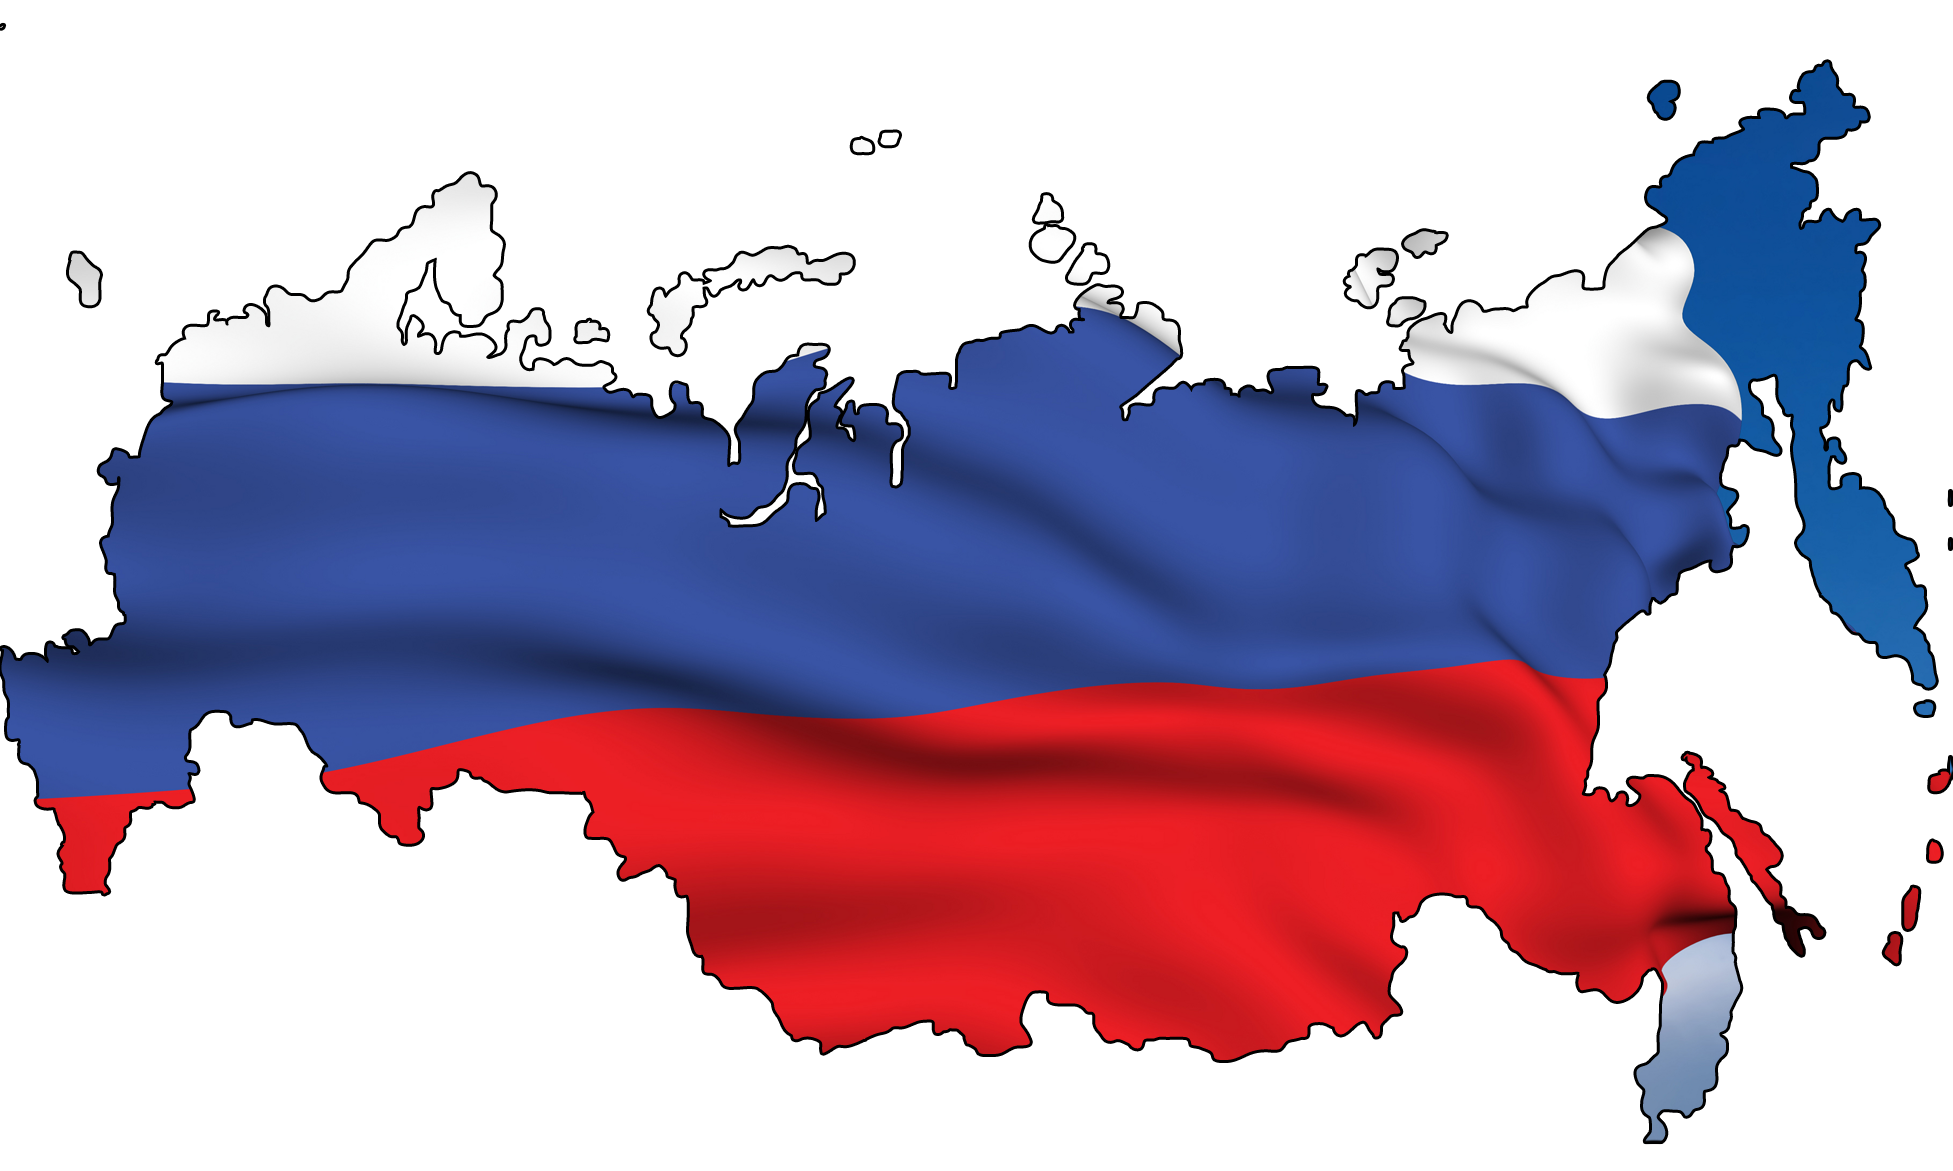 Картинка российский флаг на прозрачном фоне